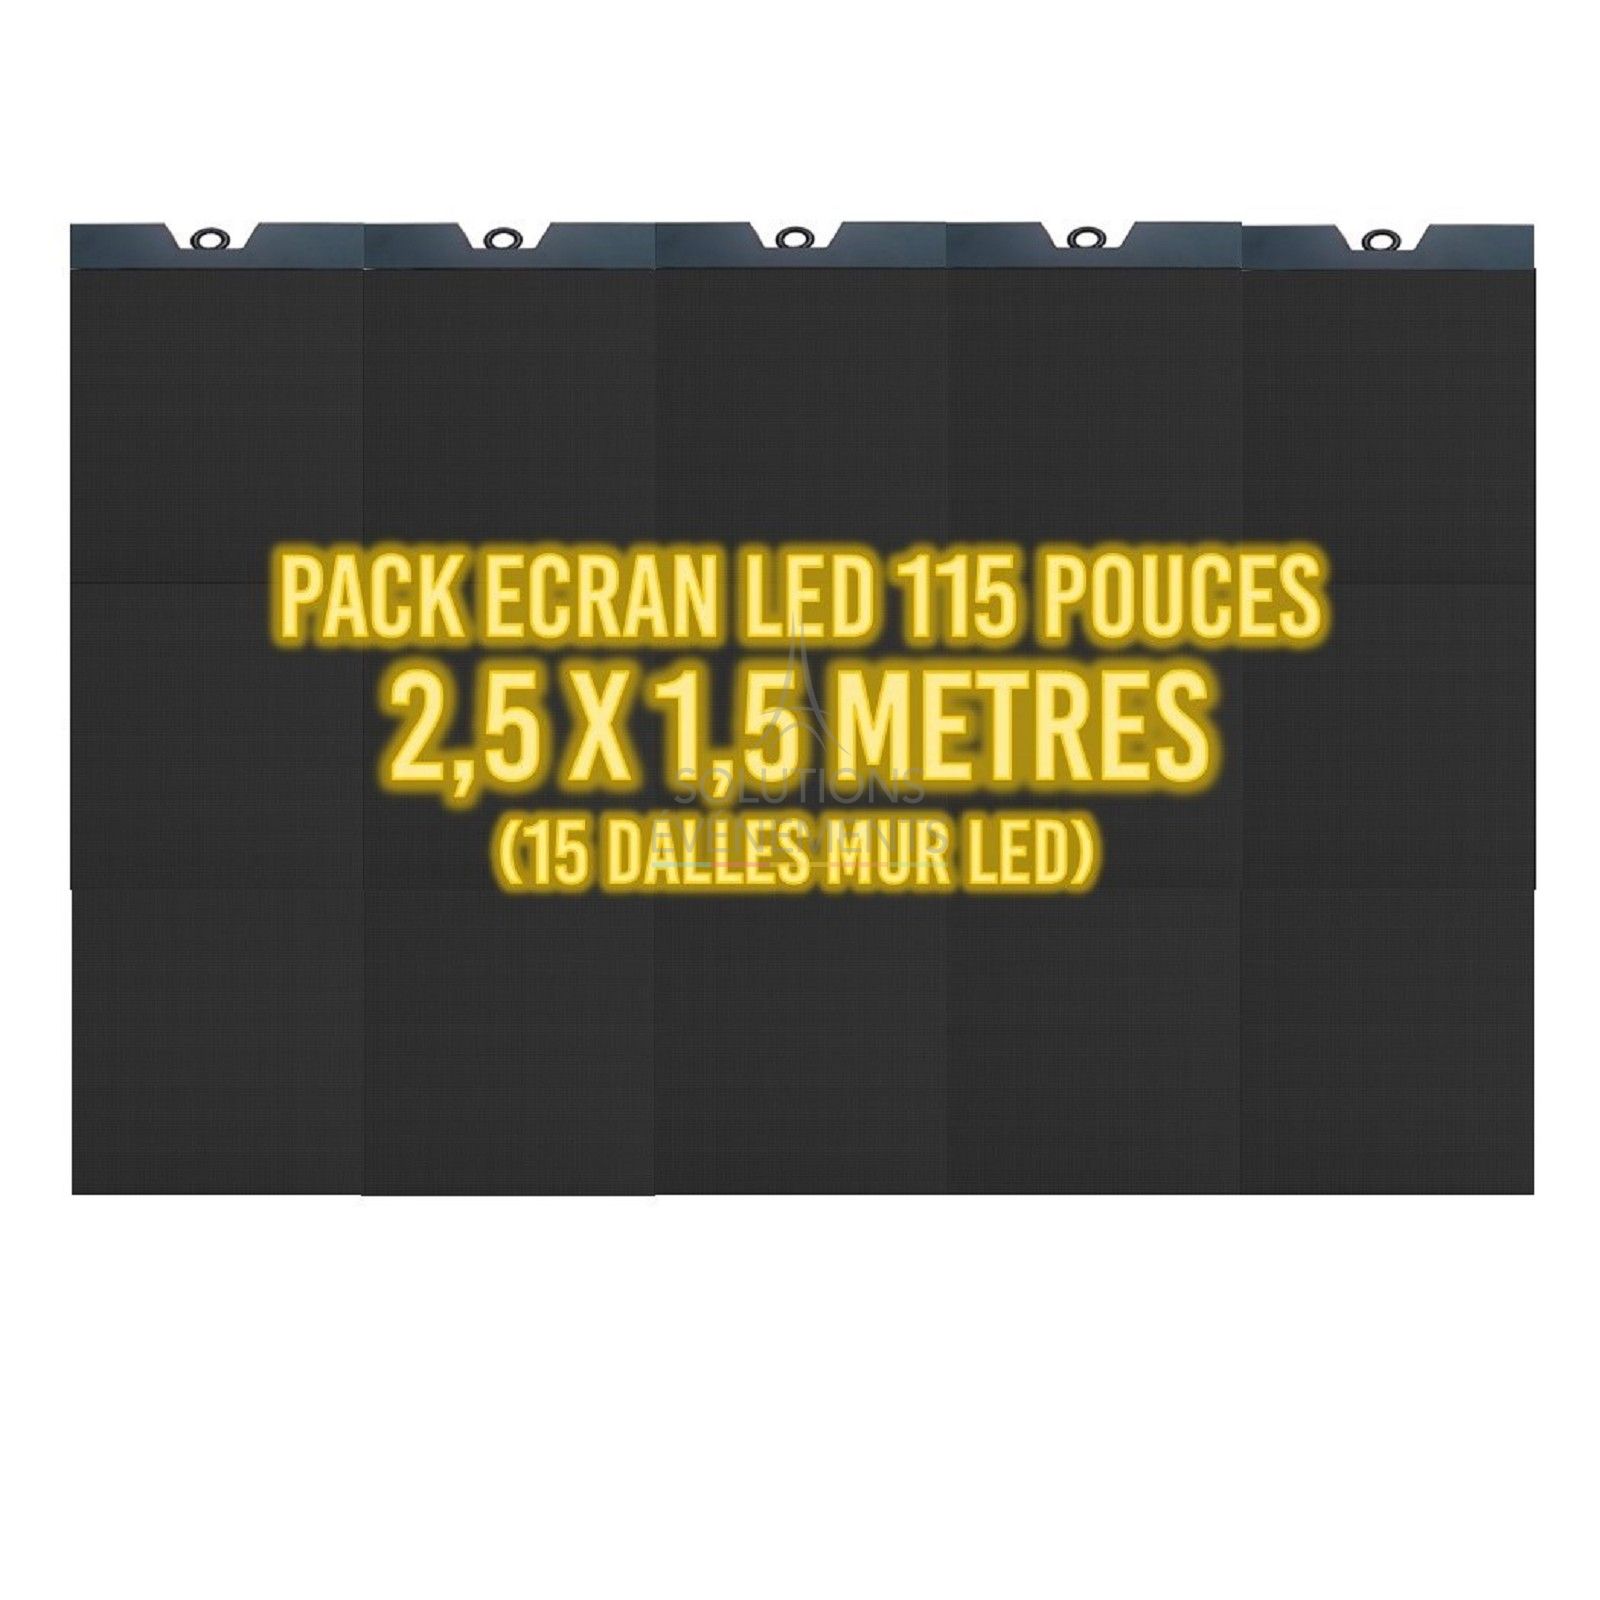 Location Ecran video de 2,5x1,5 metres avec 15 dalles led pitch 3.9mm